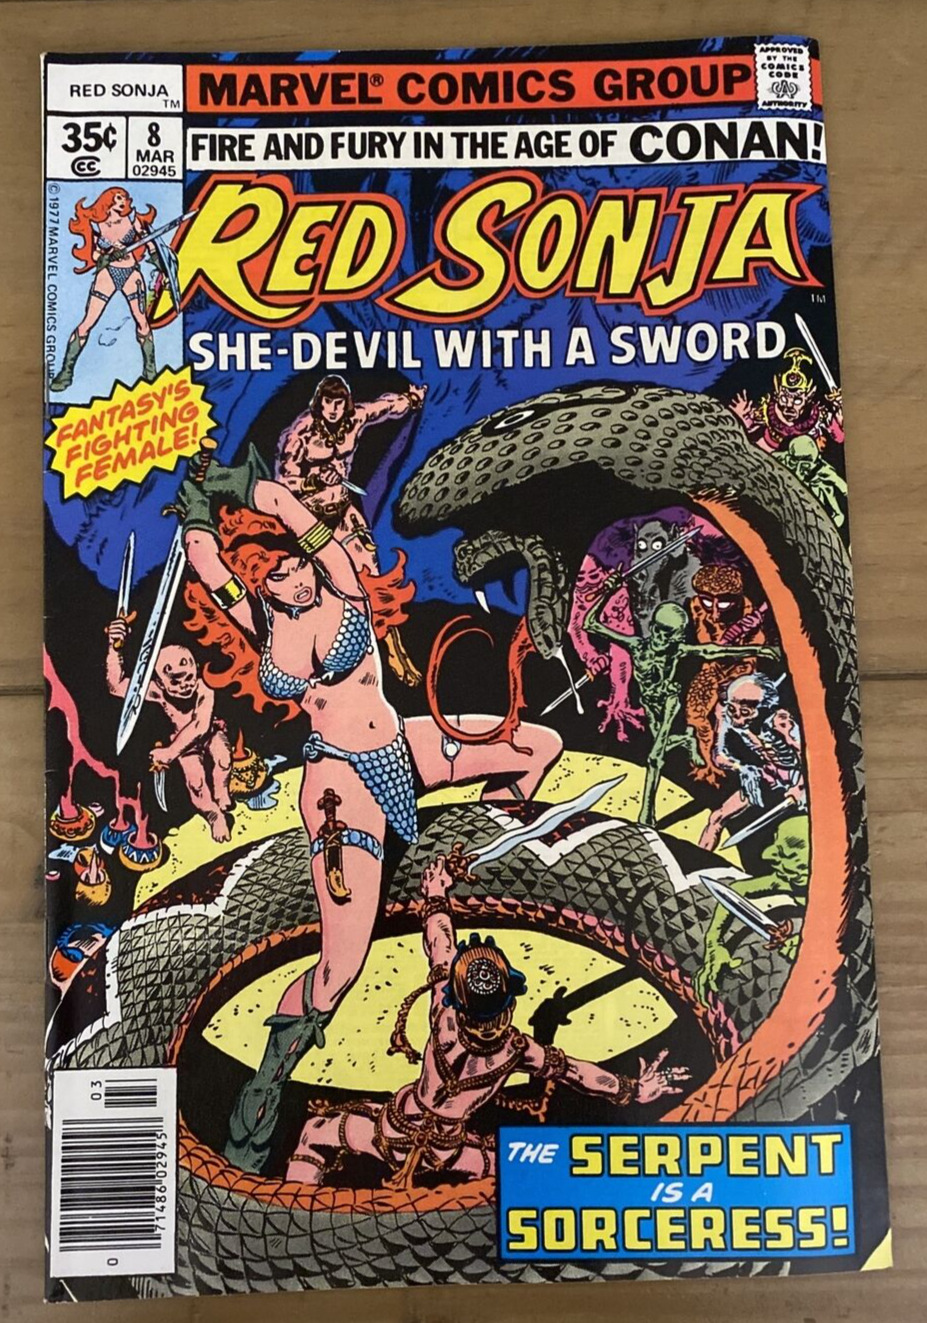 Red Sonja She-Devil With A Sword #8 Mar 1977 Marvel Comics Group Vintage Comic